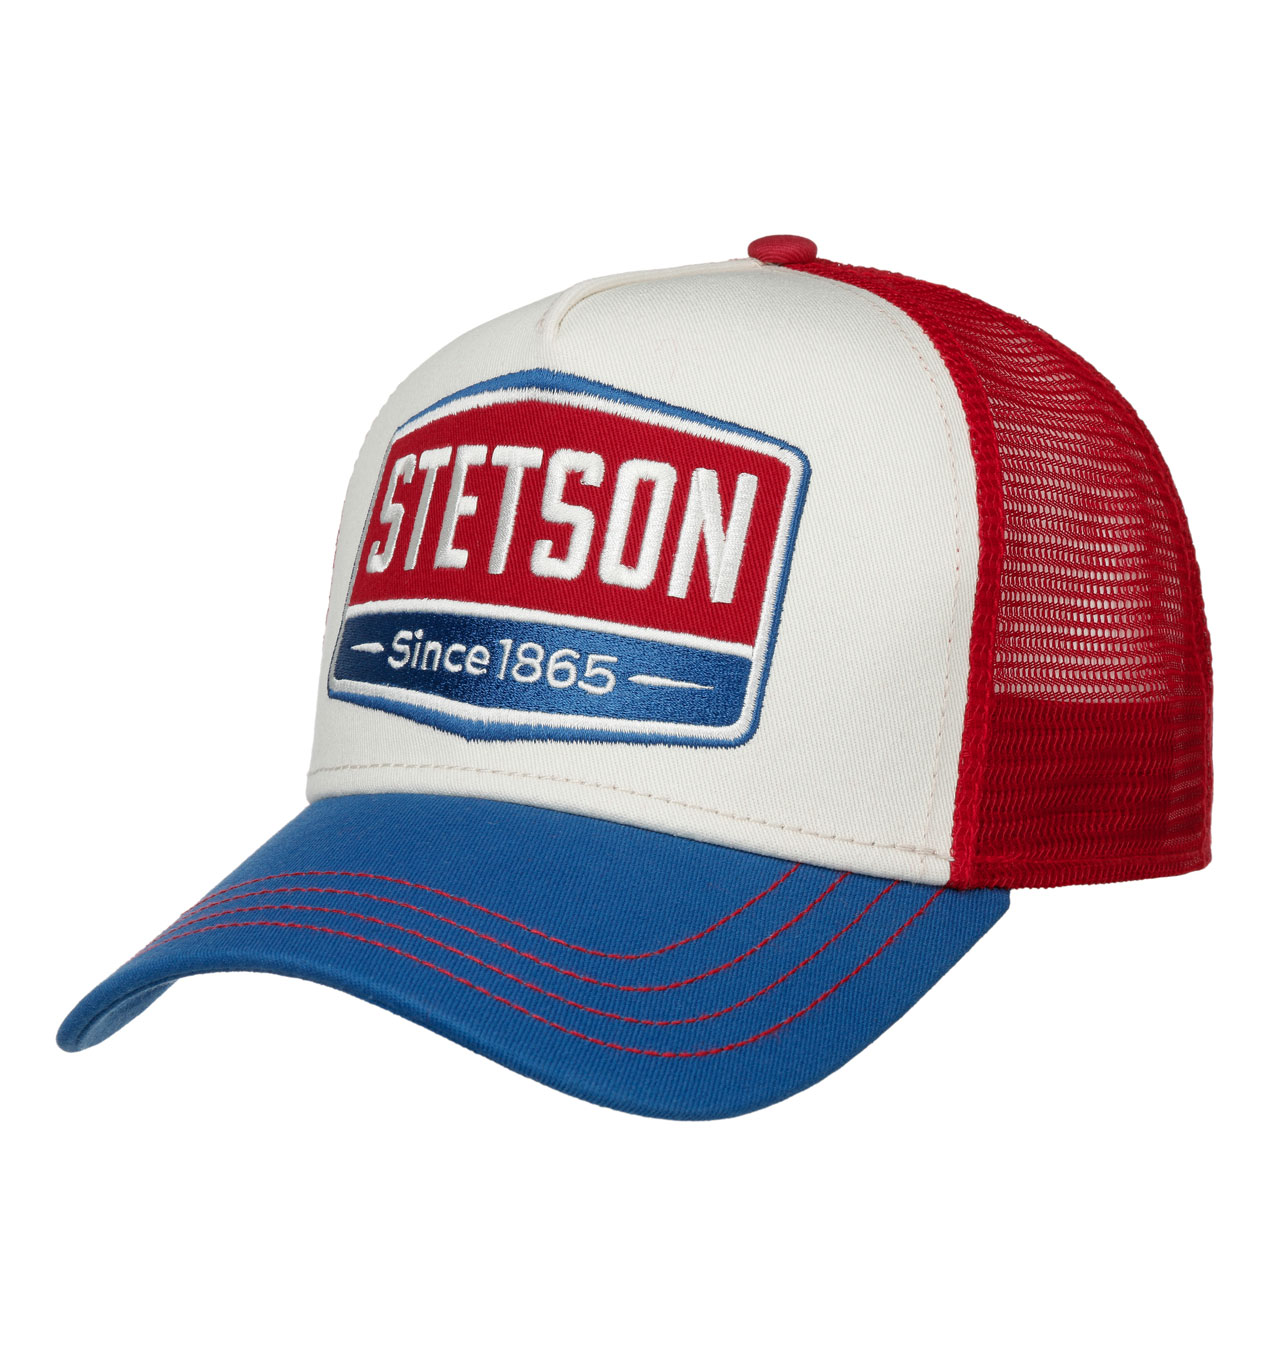 Stetson - Gasoline Trucker Cap - Red/White/Blue